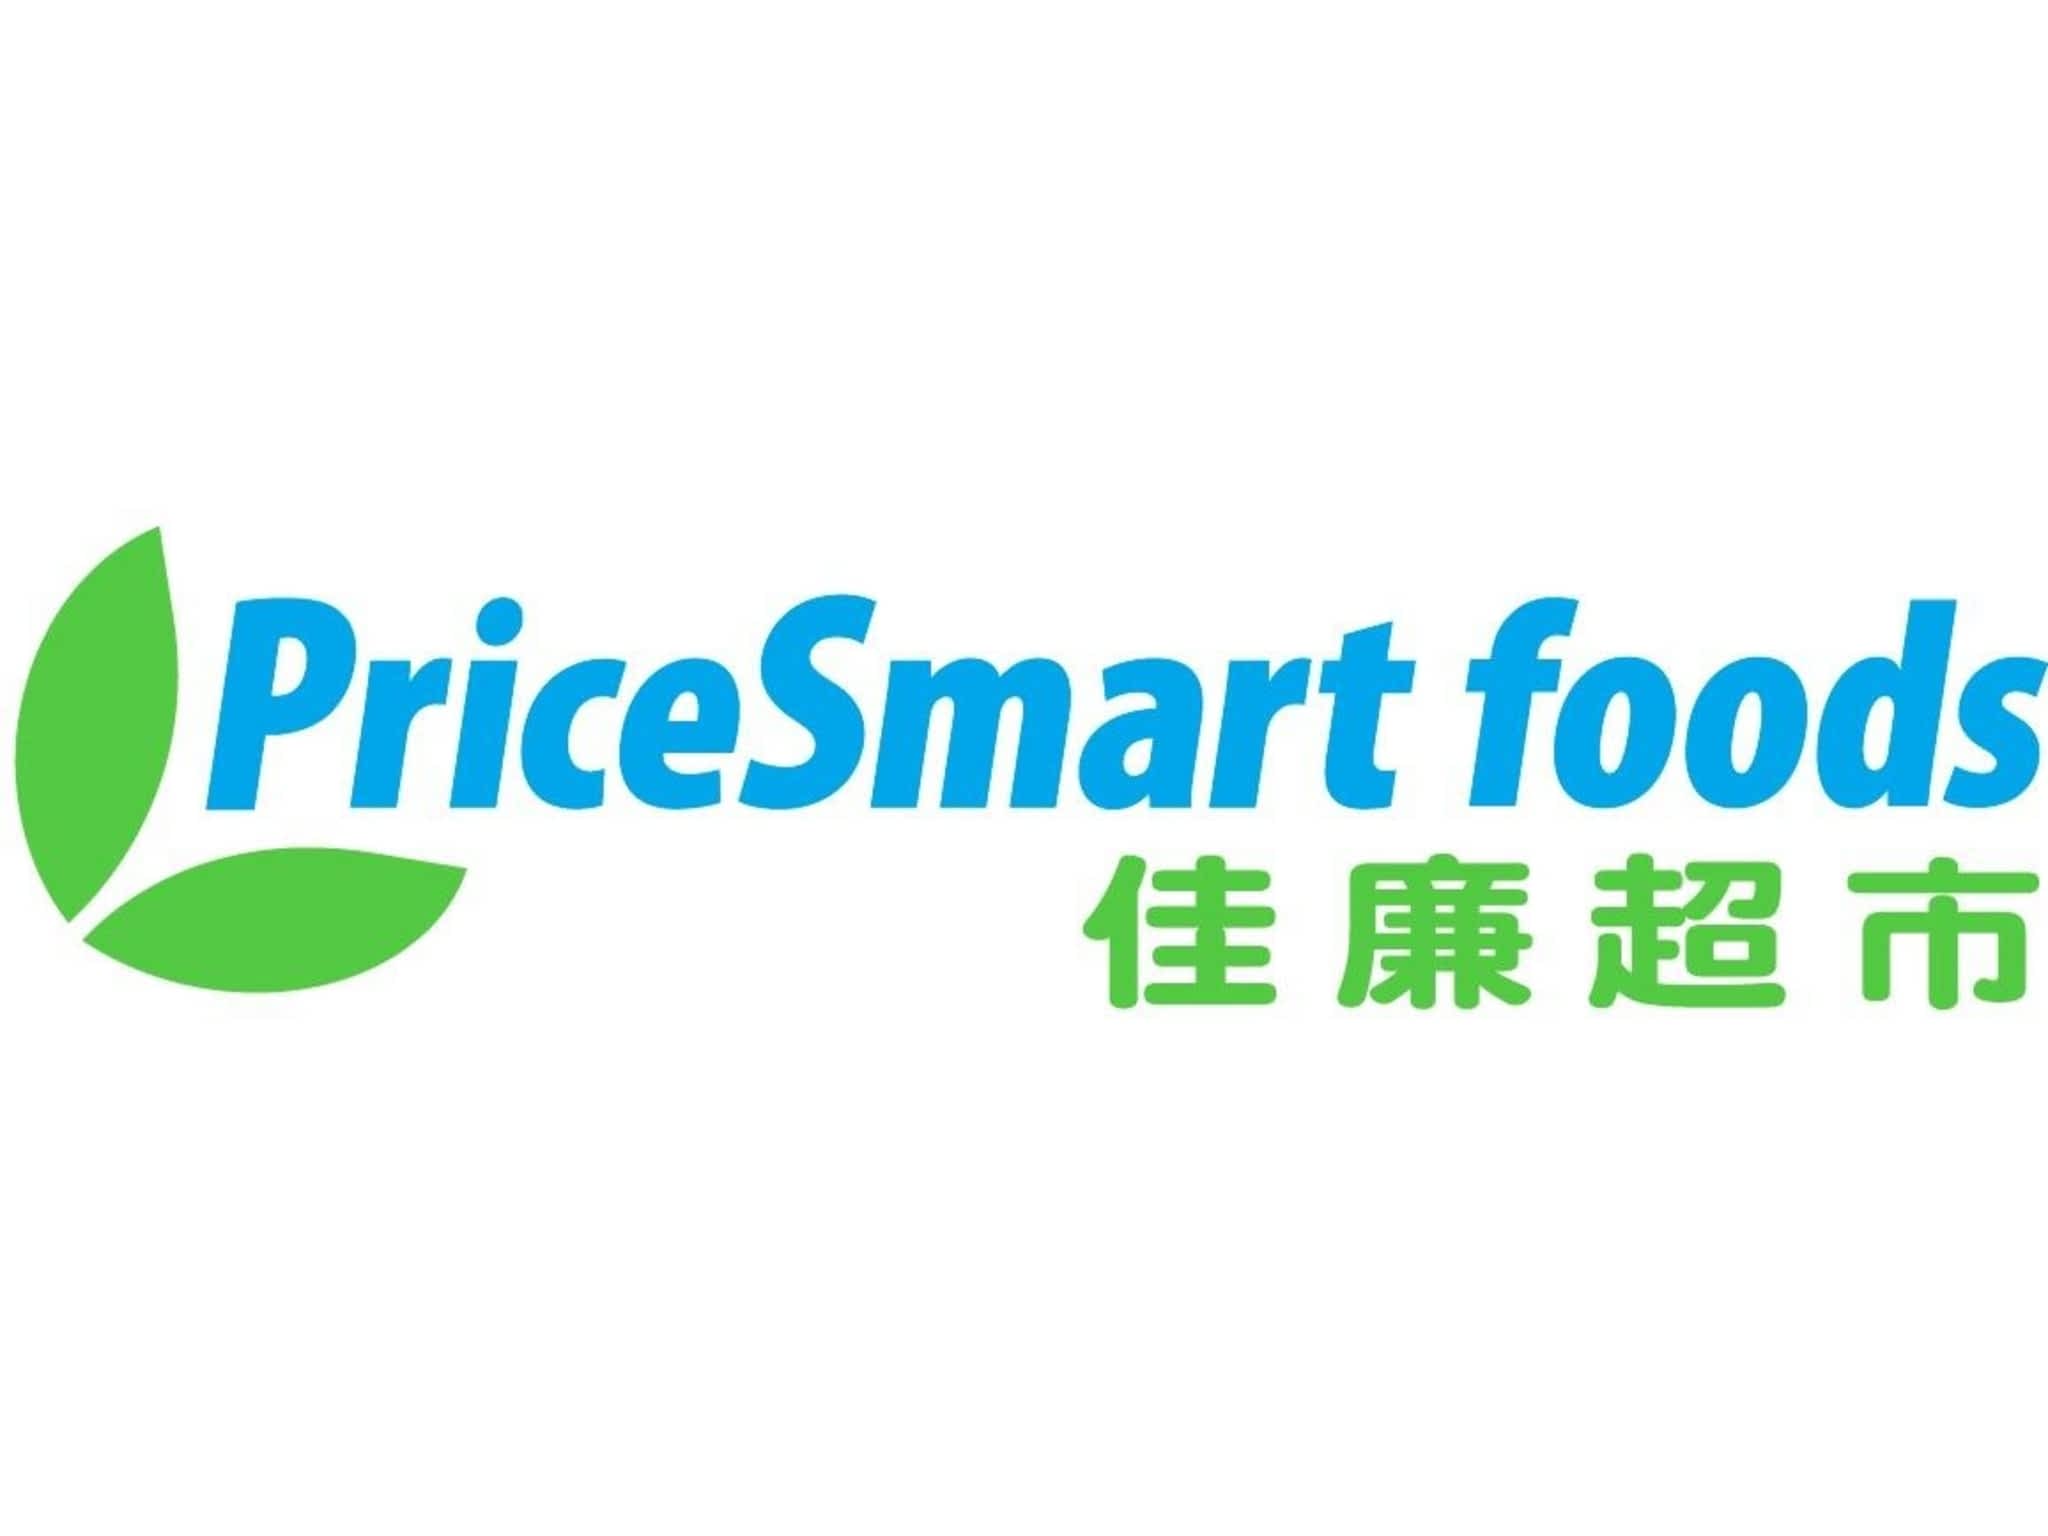 photo PriceSmart Foods